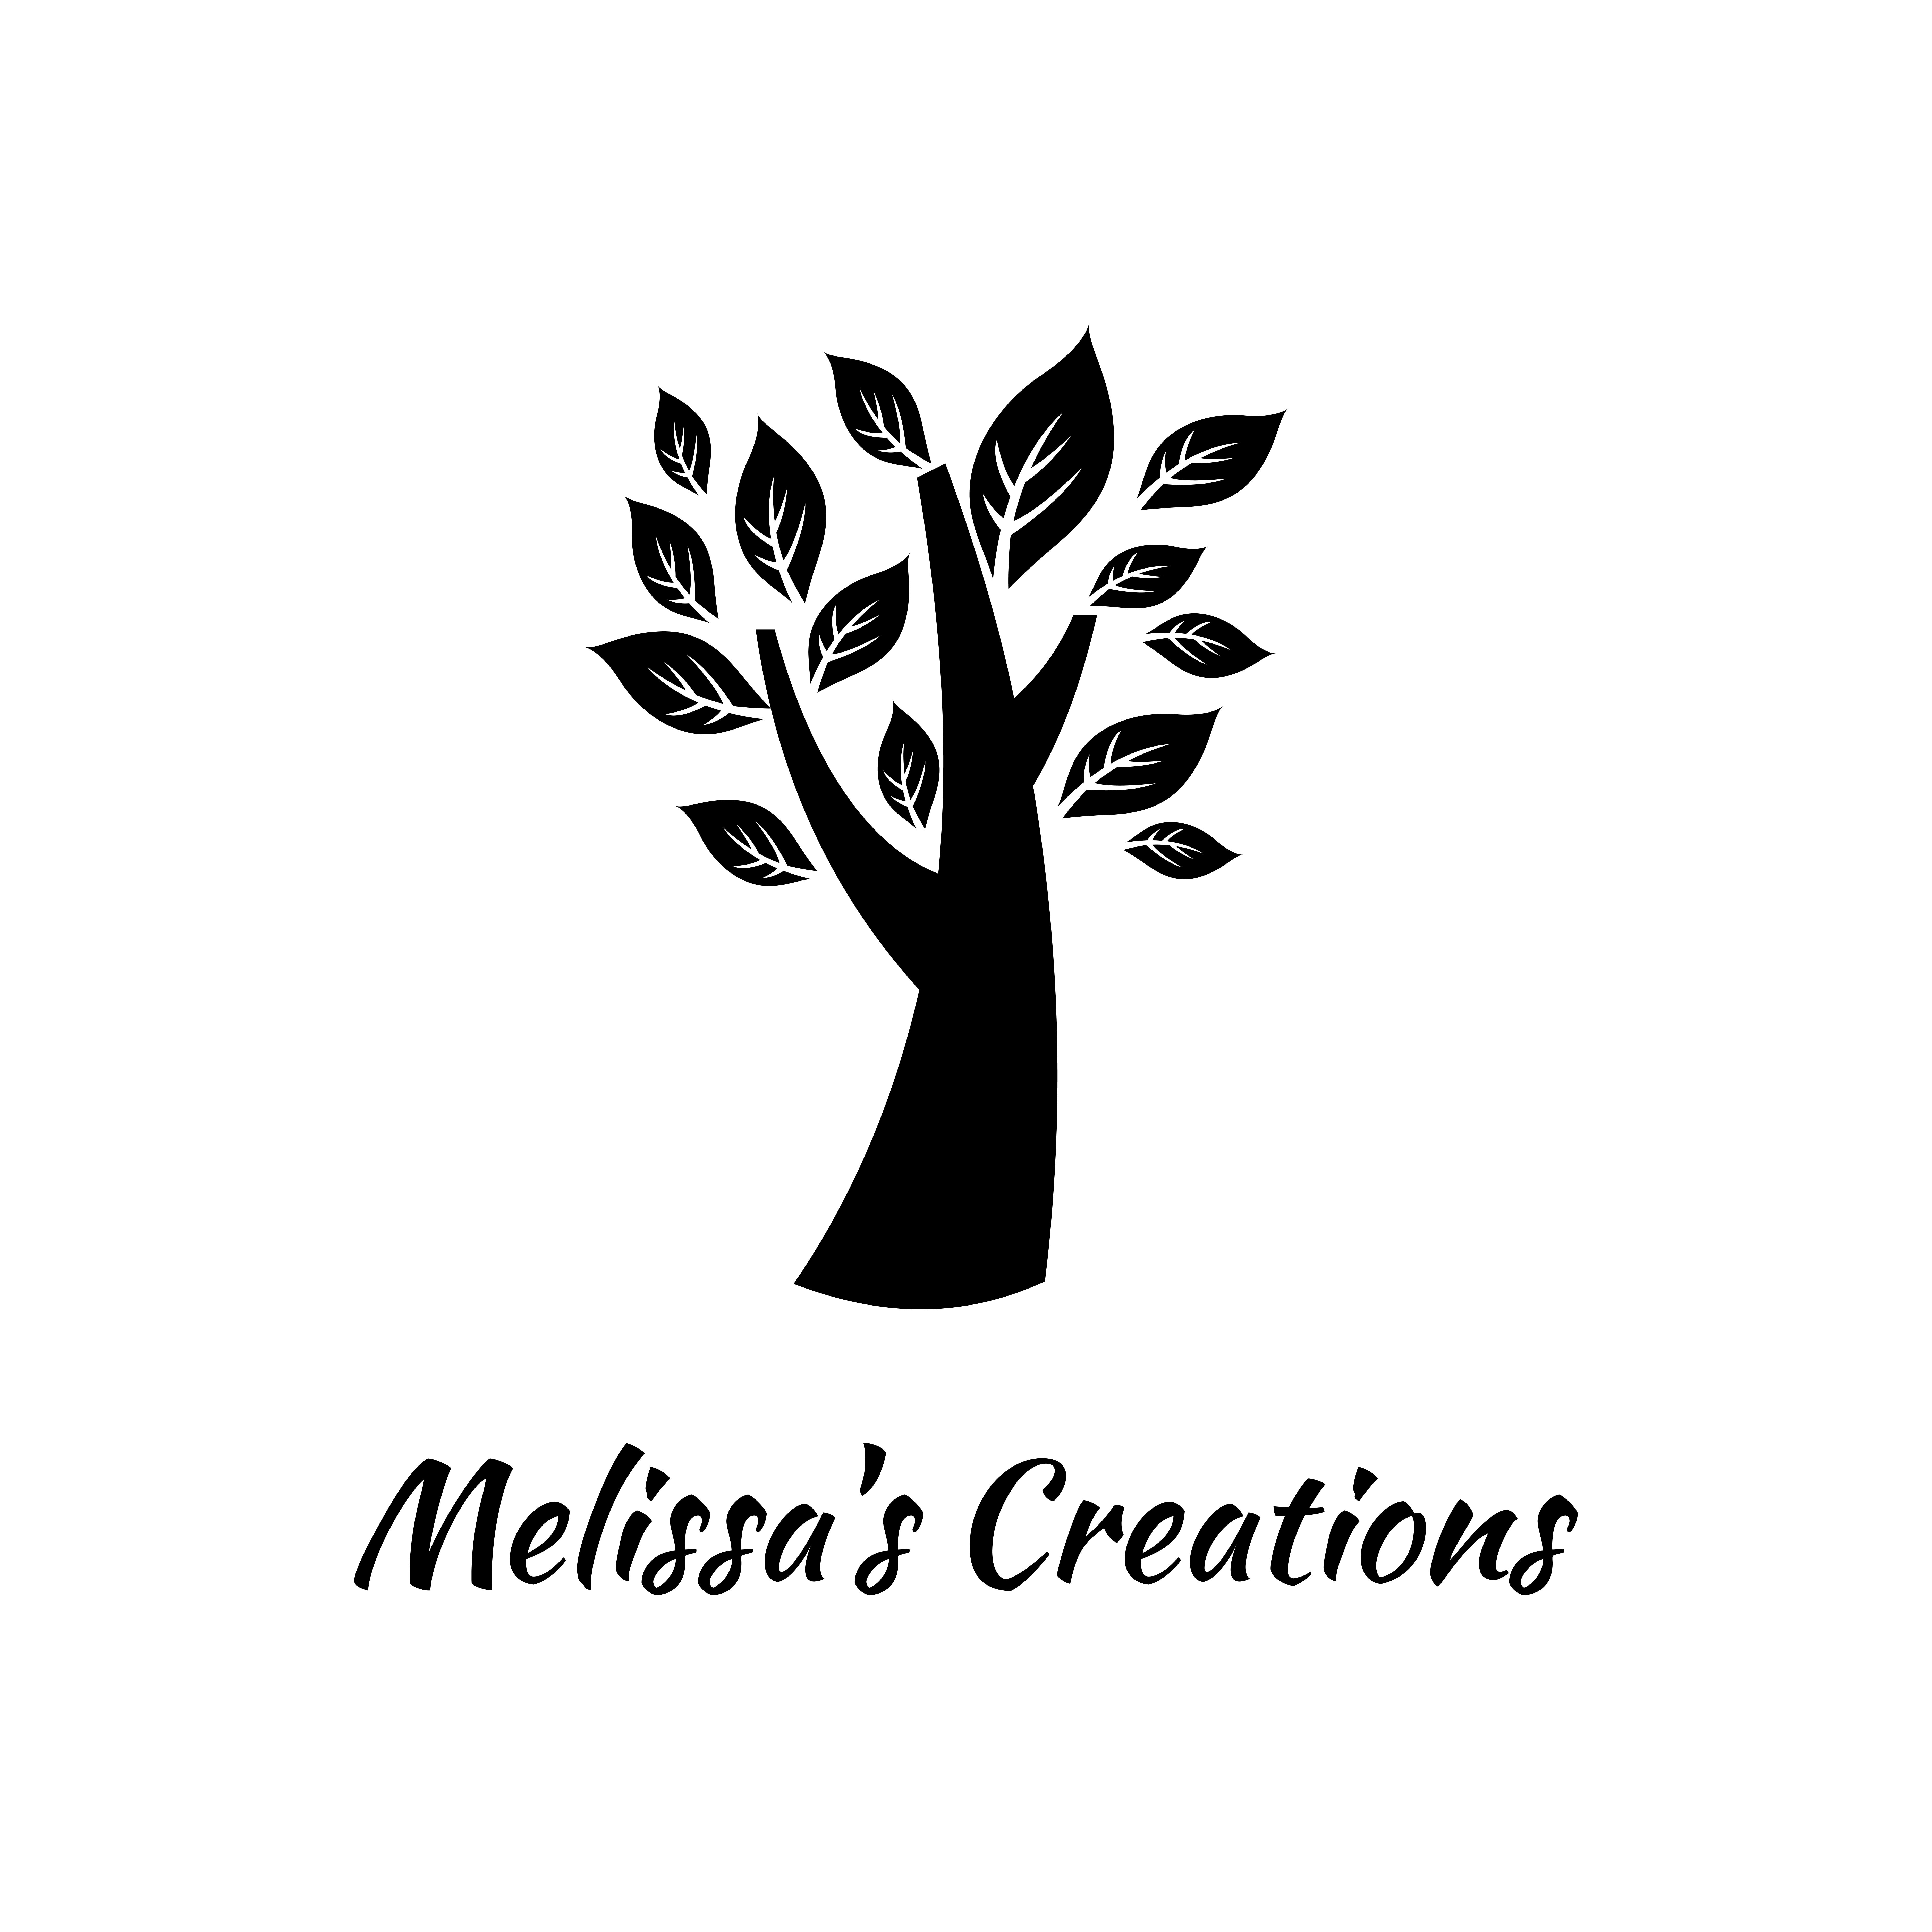 Melissa's Creations